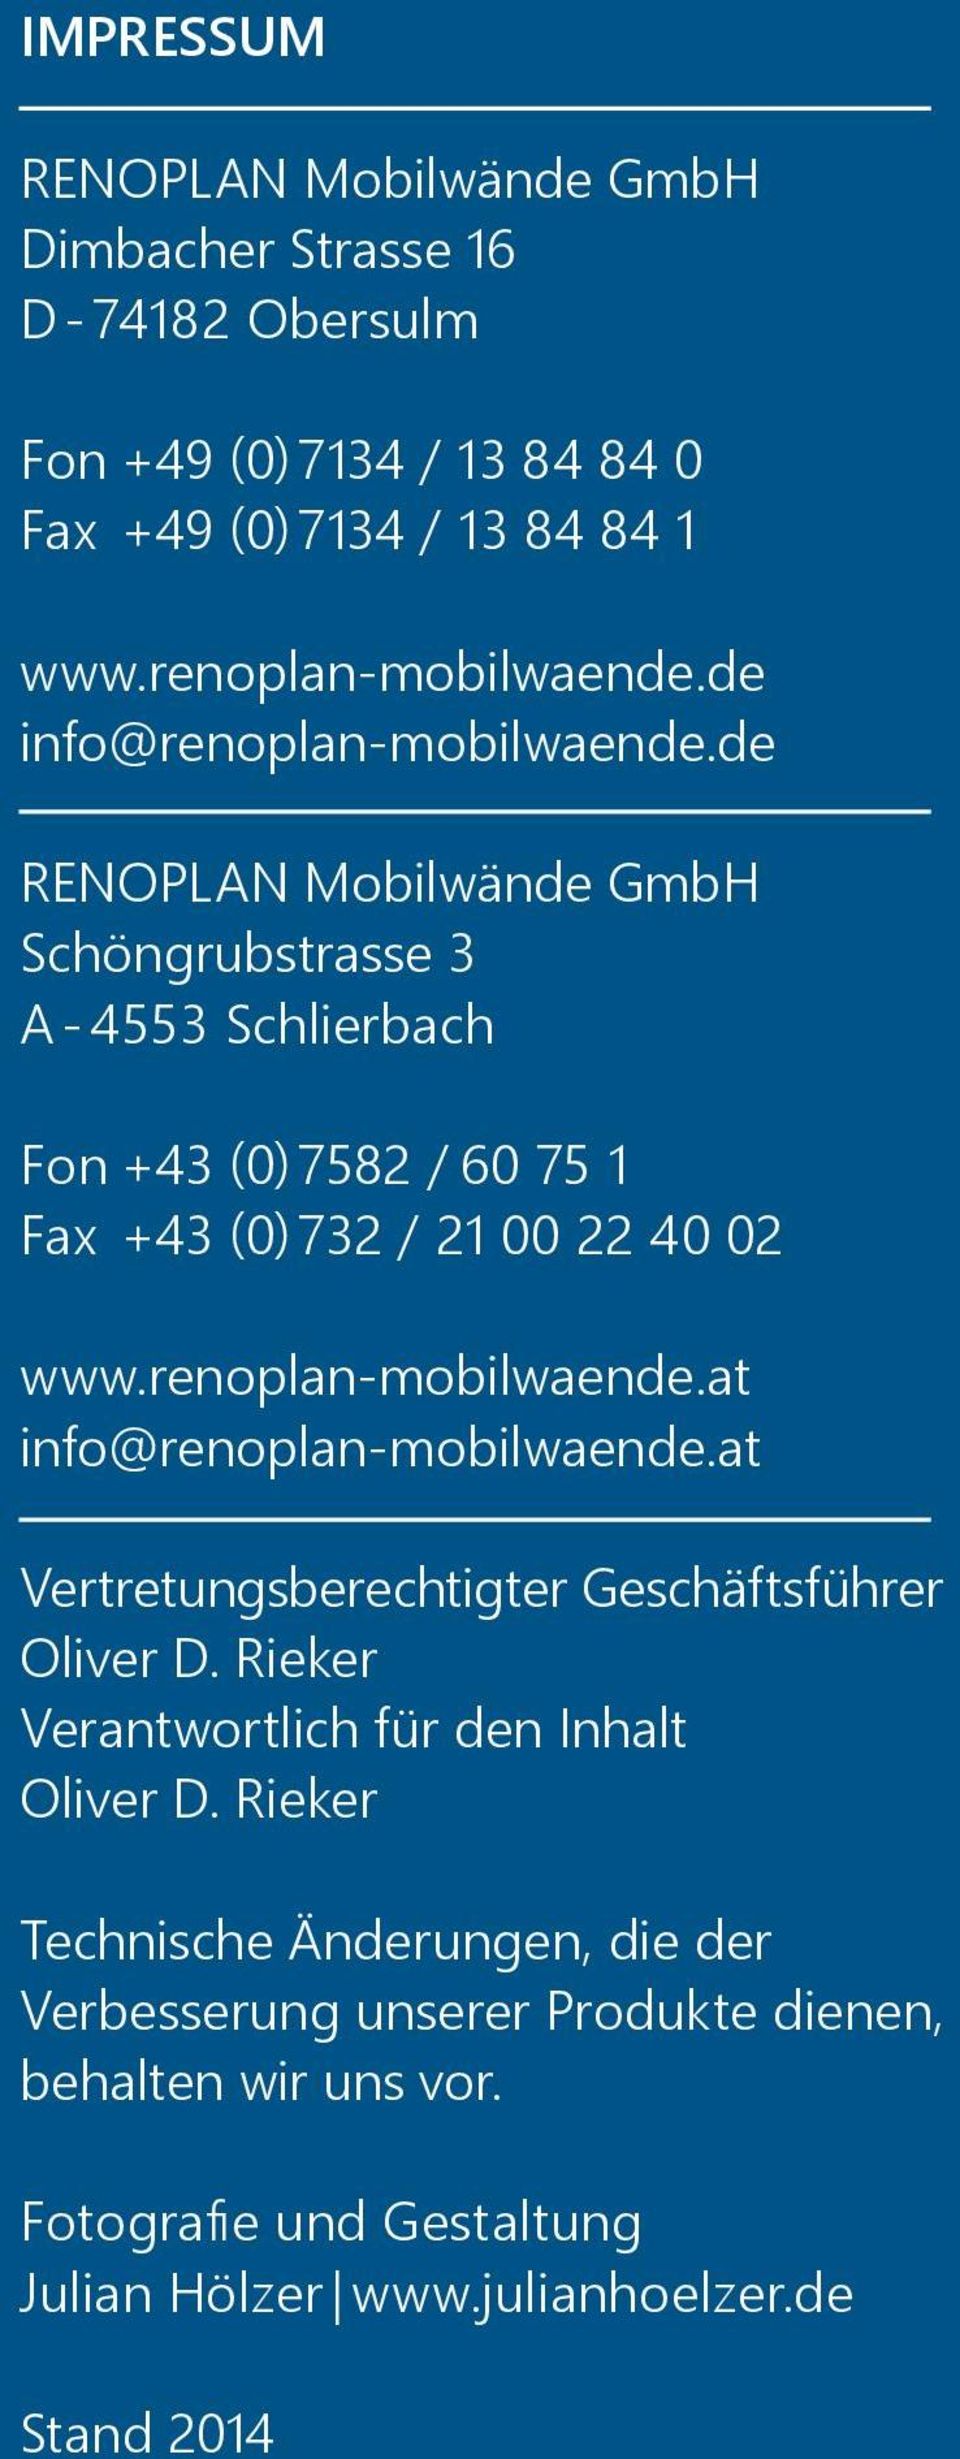 de RENOPLAN Mobilwände GmbH Schöngrubstrasse 3 A - 4553 Schlierbach Fon +43 (0) 7582 / 60 75 1 Fax +43 (0) 732 / 21 00 22 40 02 www.renoplan-mobilwaende.